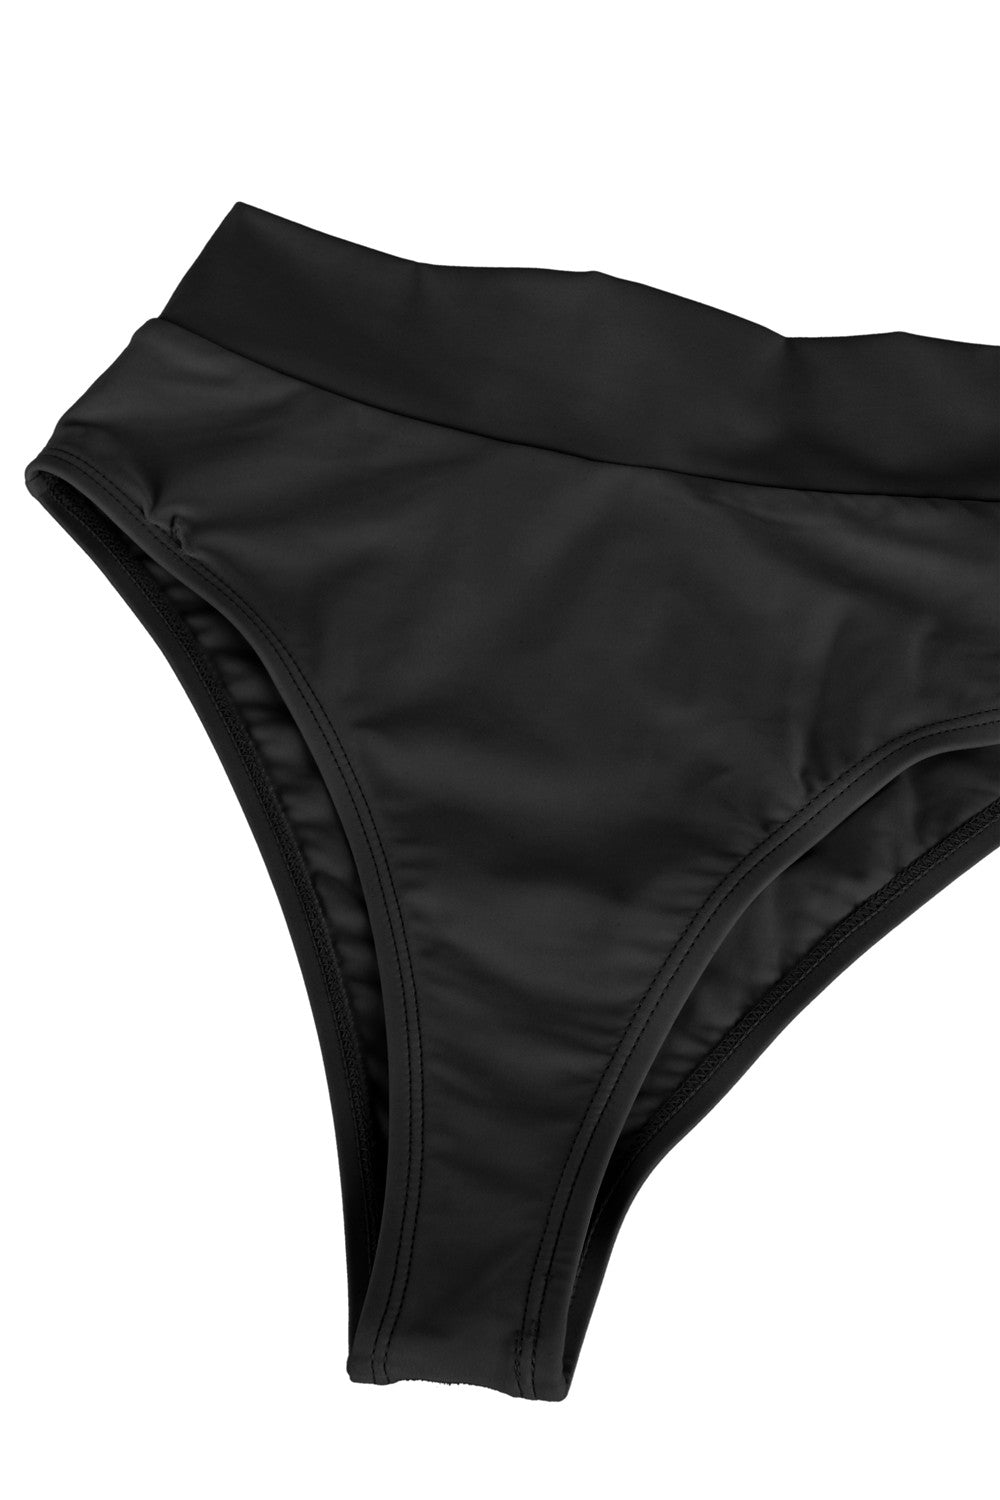 Sexy Bandeau High Waisted Bikini Bottoms Set Two Piece Swimsuits Black